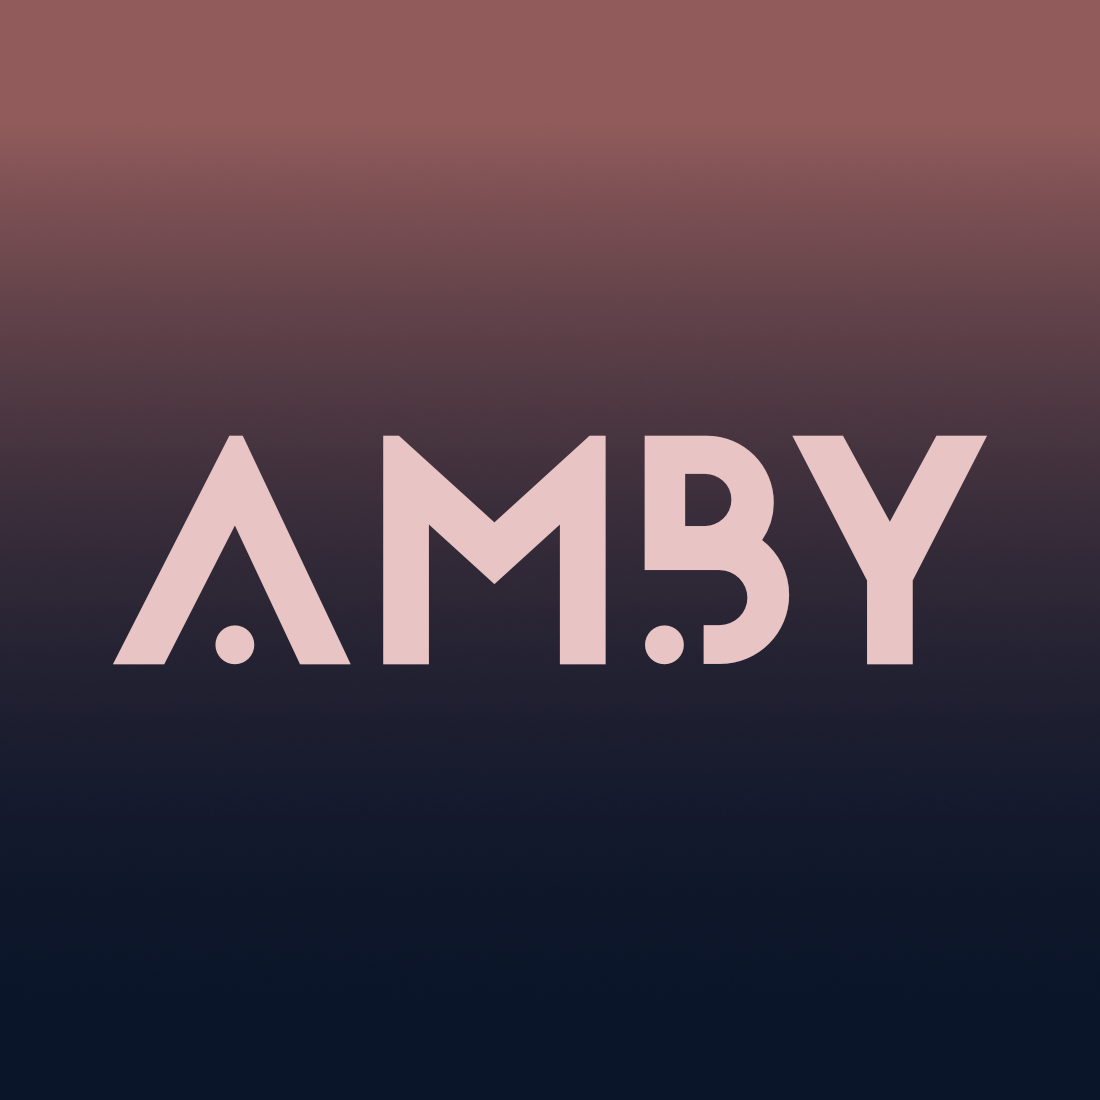 Amby By Nox Sound Design